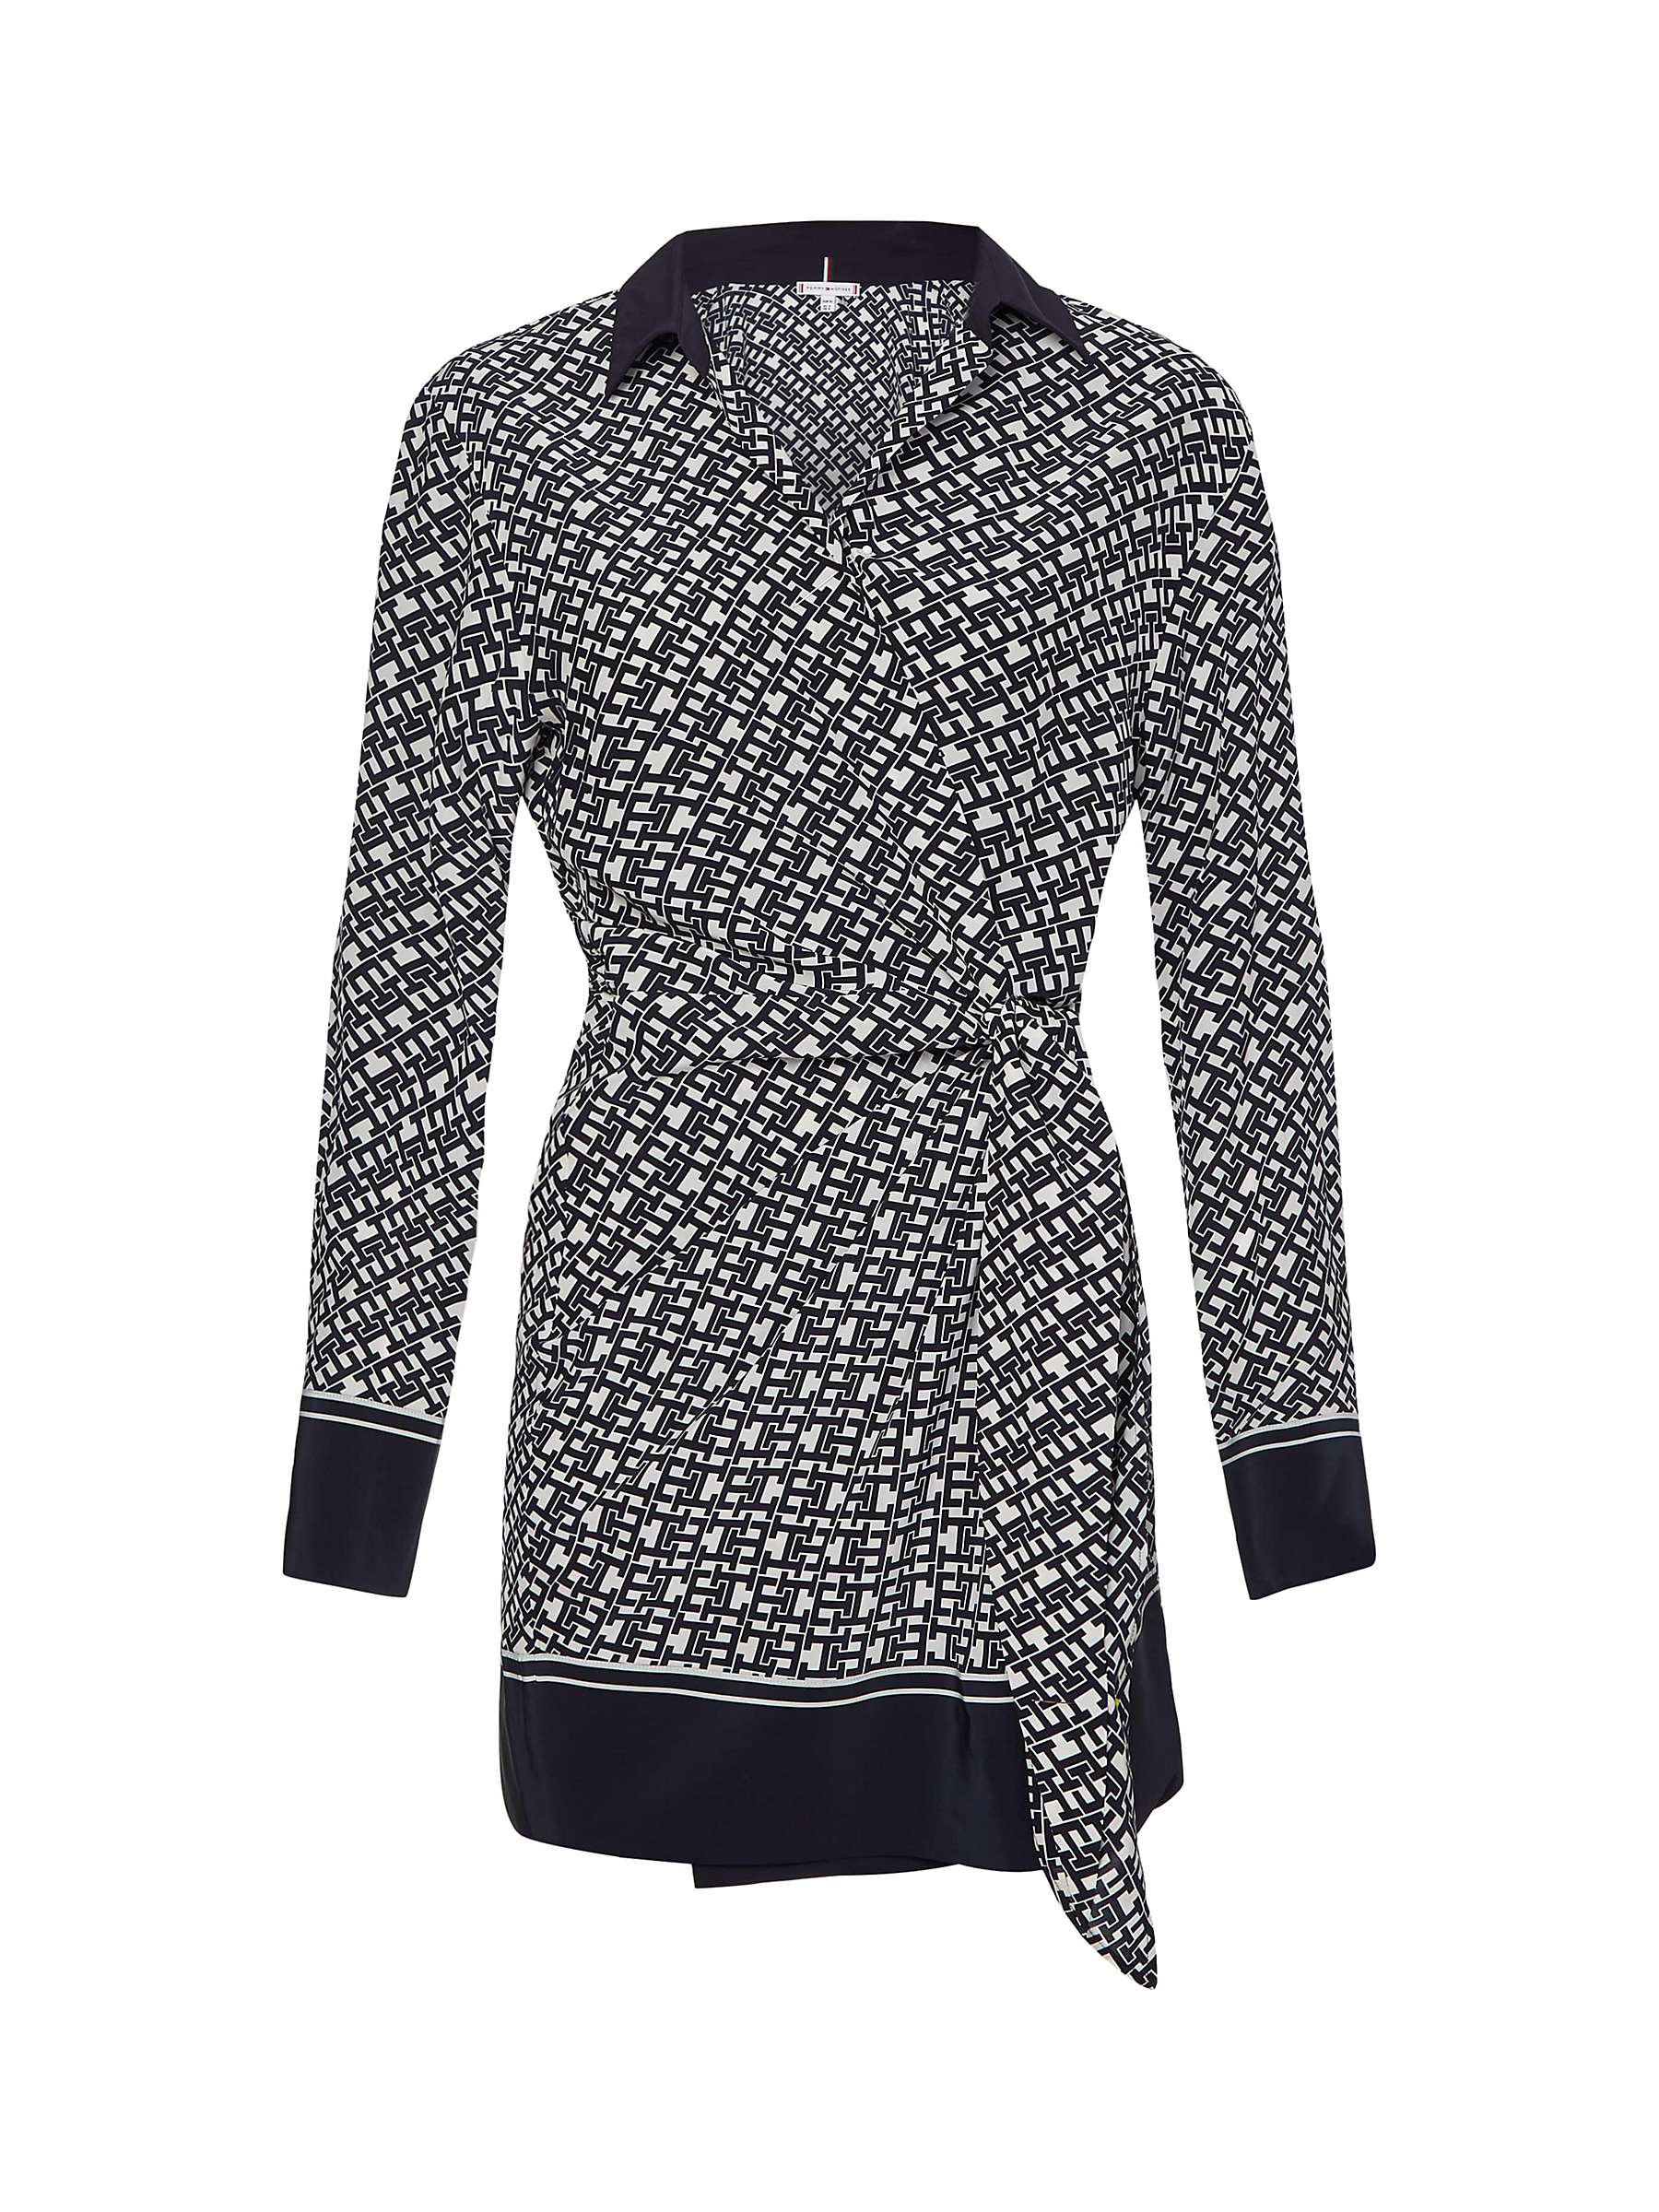 Buy Tommy Hilfiger Monogram Knitted Shirt Dress, Black/White Online at johnlewis.com